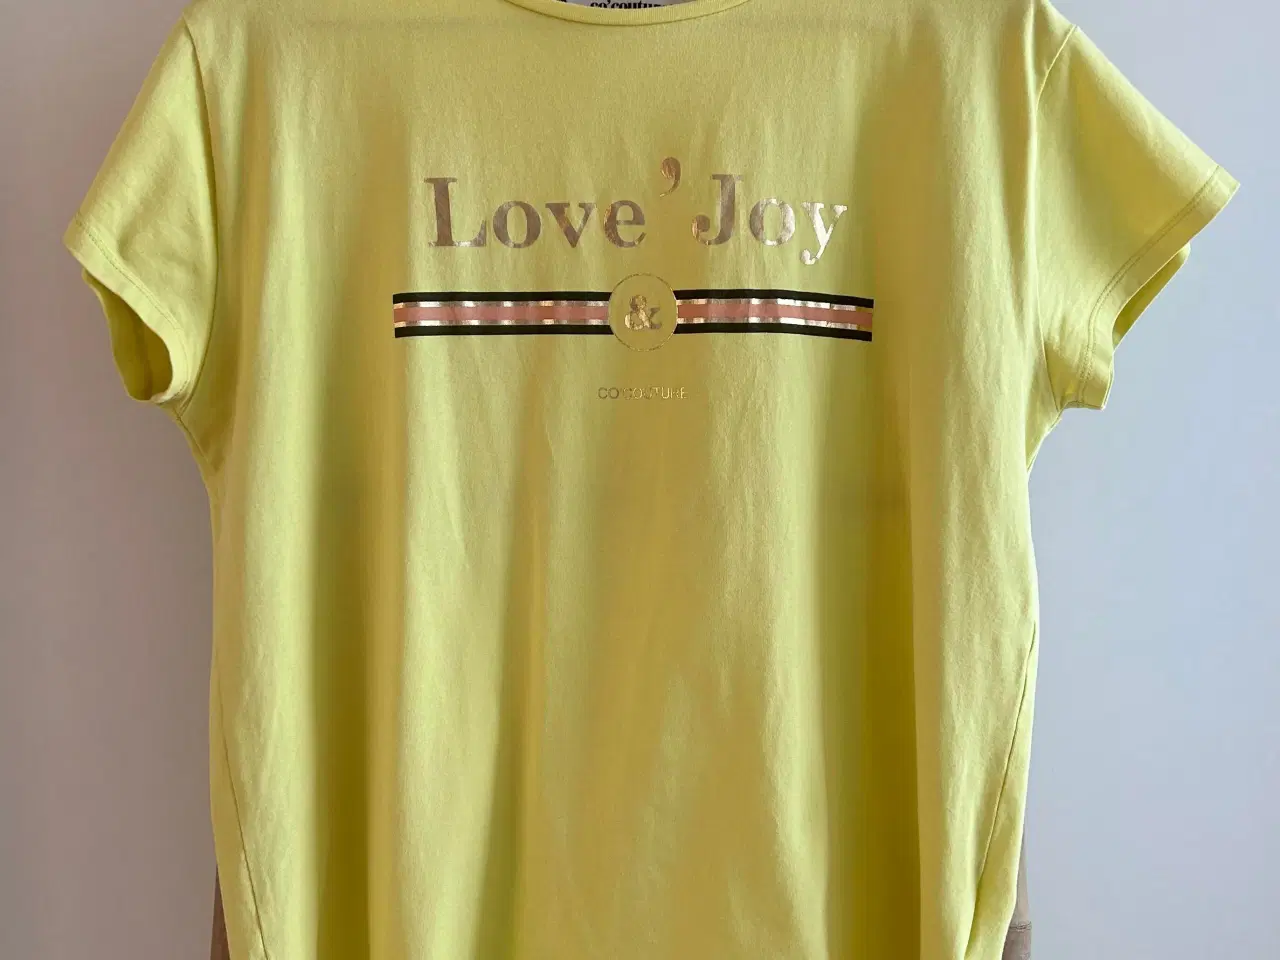 Billede 1 - Co'Couture t-shirt, gul, str. M